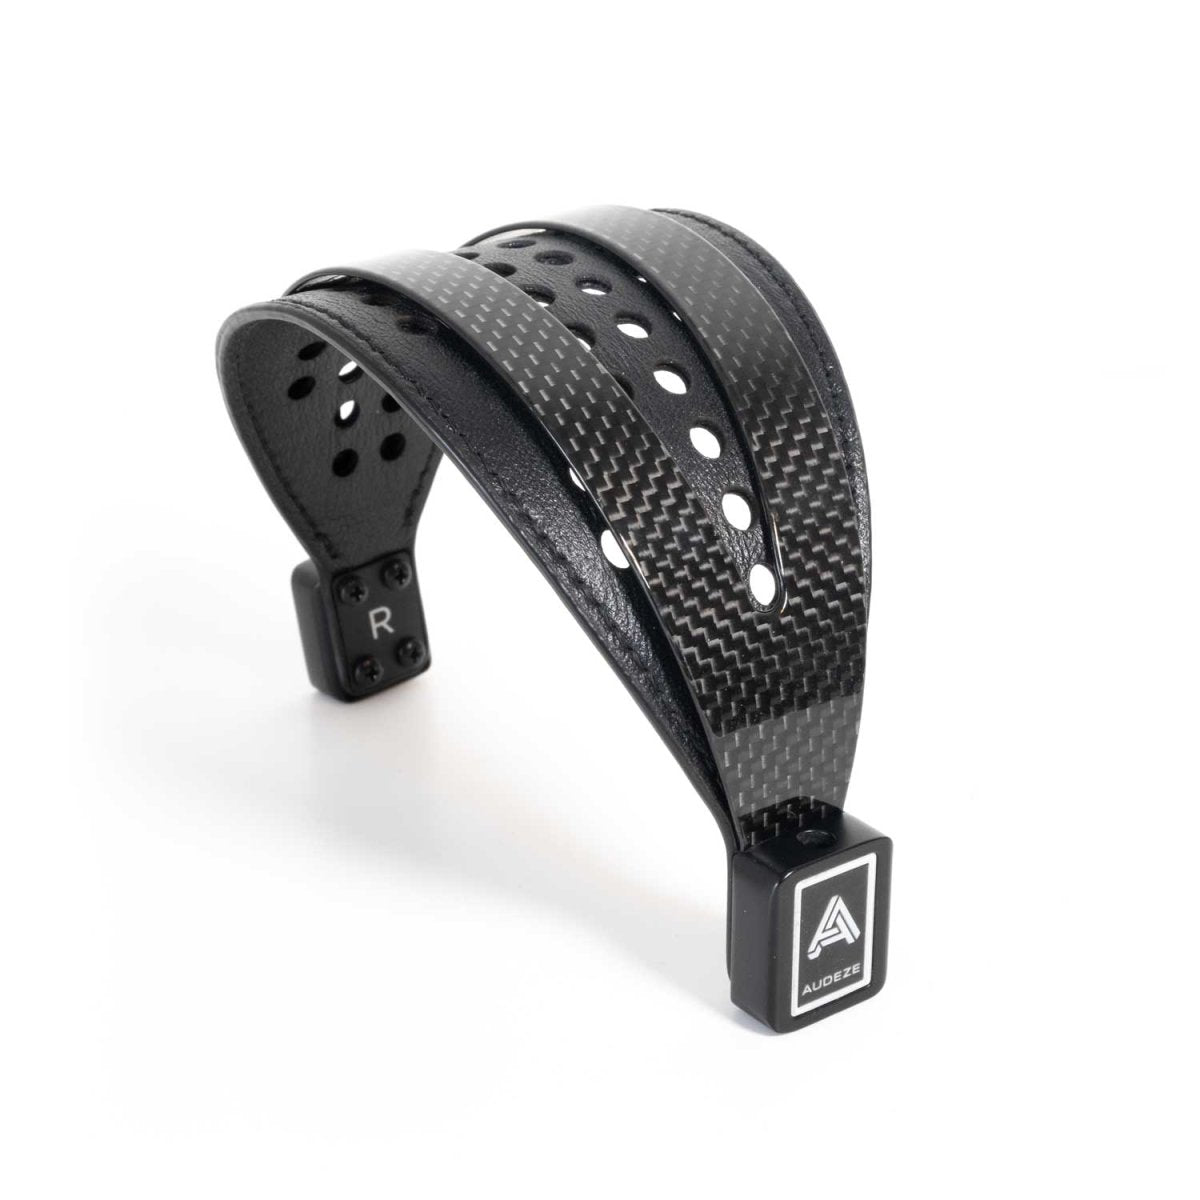 Audeze Carbon fiber headband kit for all LCDs-headband-Audeze-PremiumHIFI